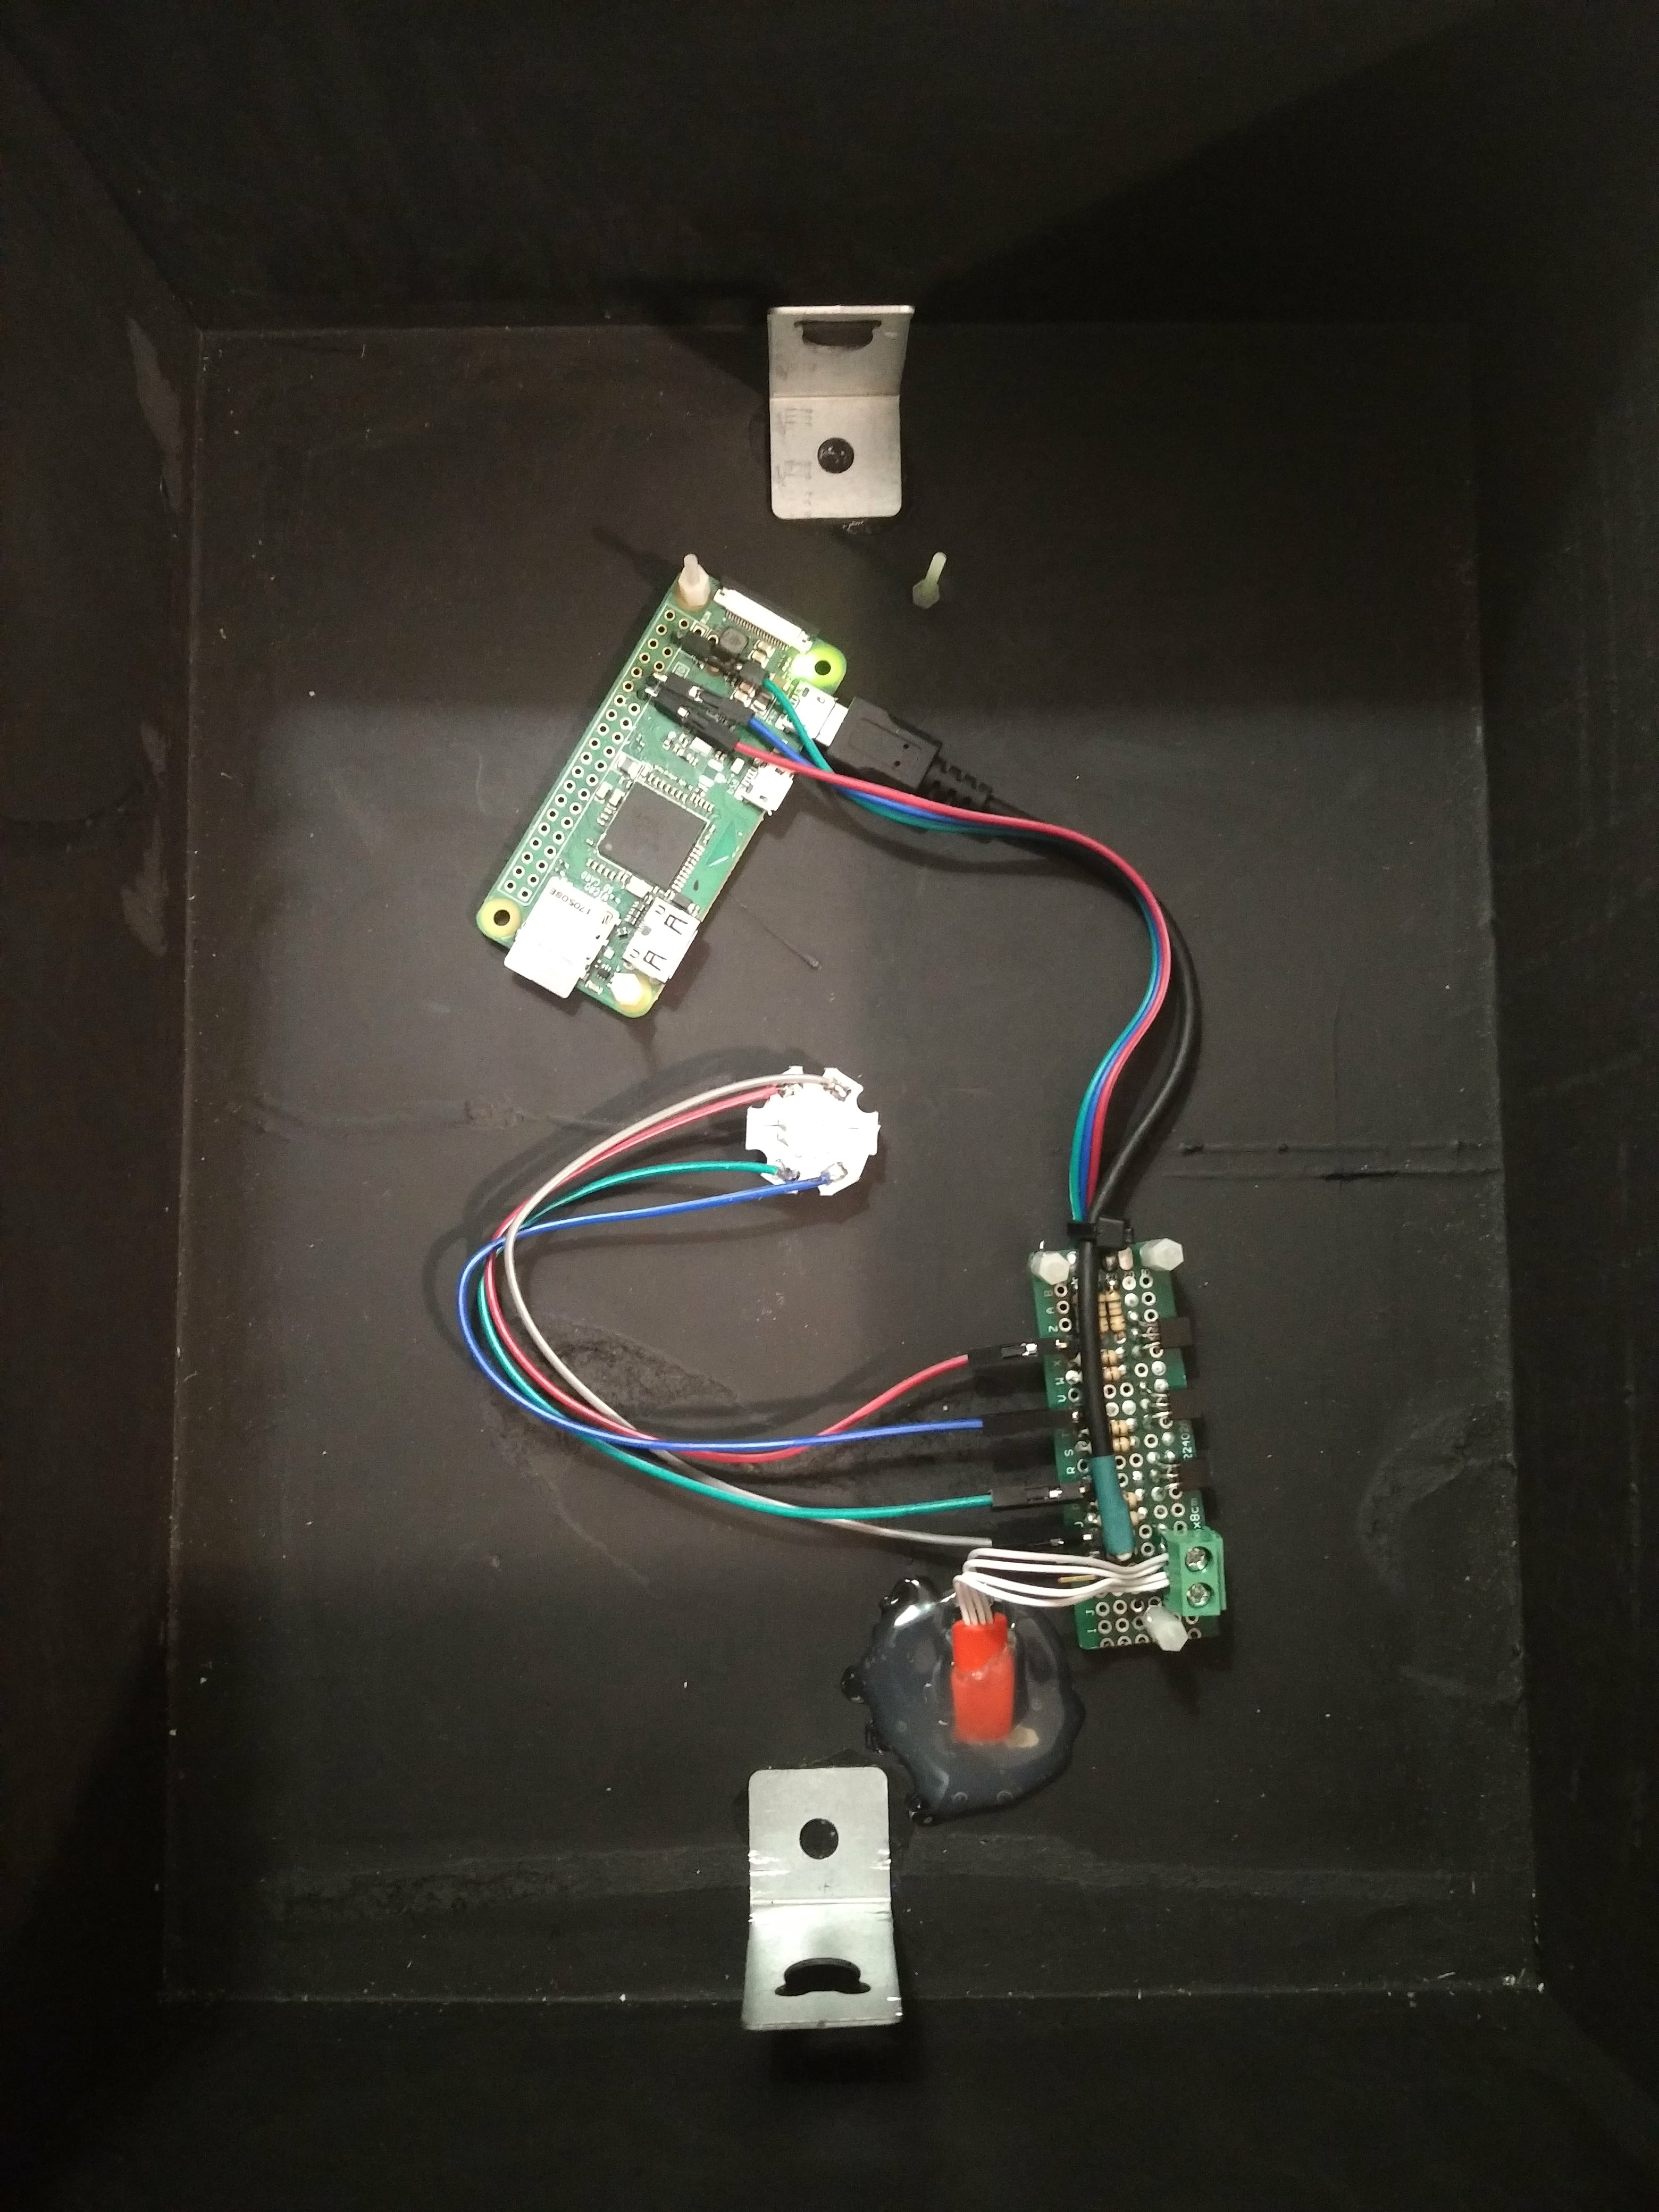 electronics mounted inside the box